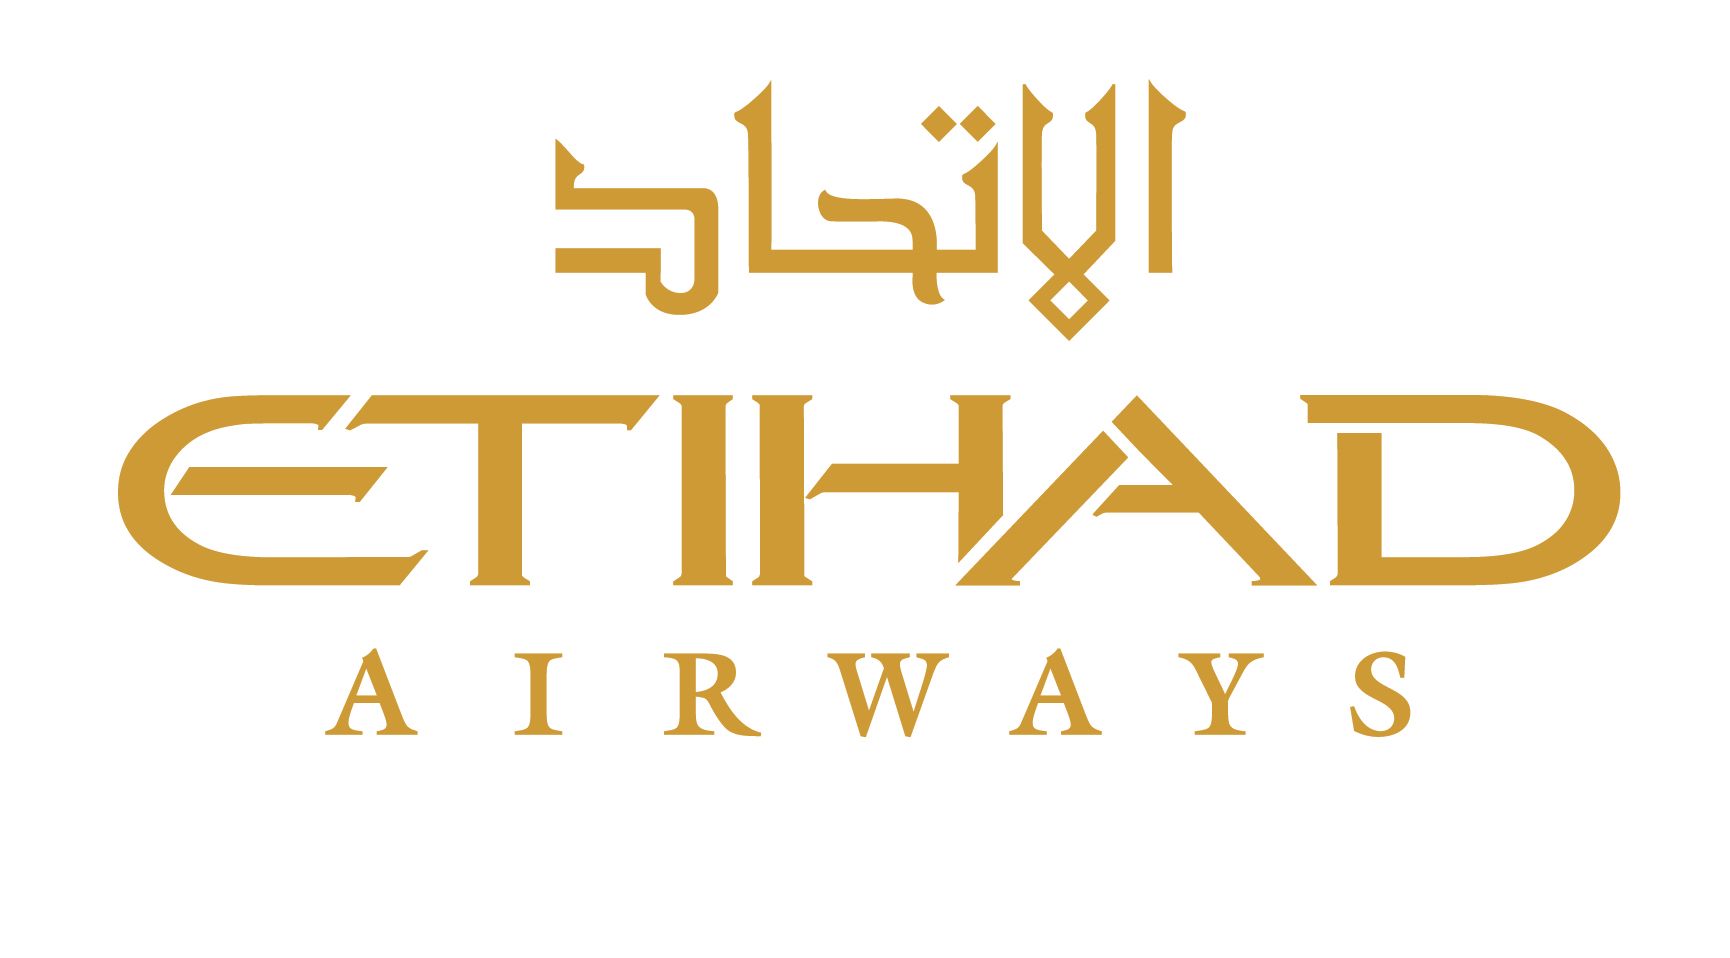 Manchester airport terminal 1 - Etihad Airways at Manchester